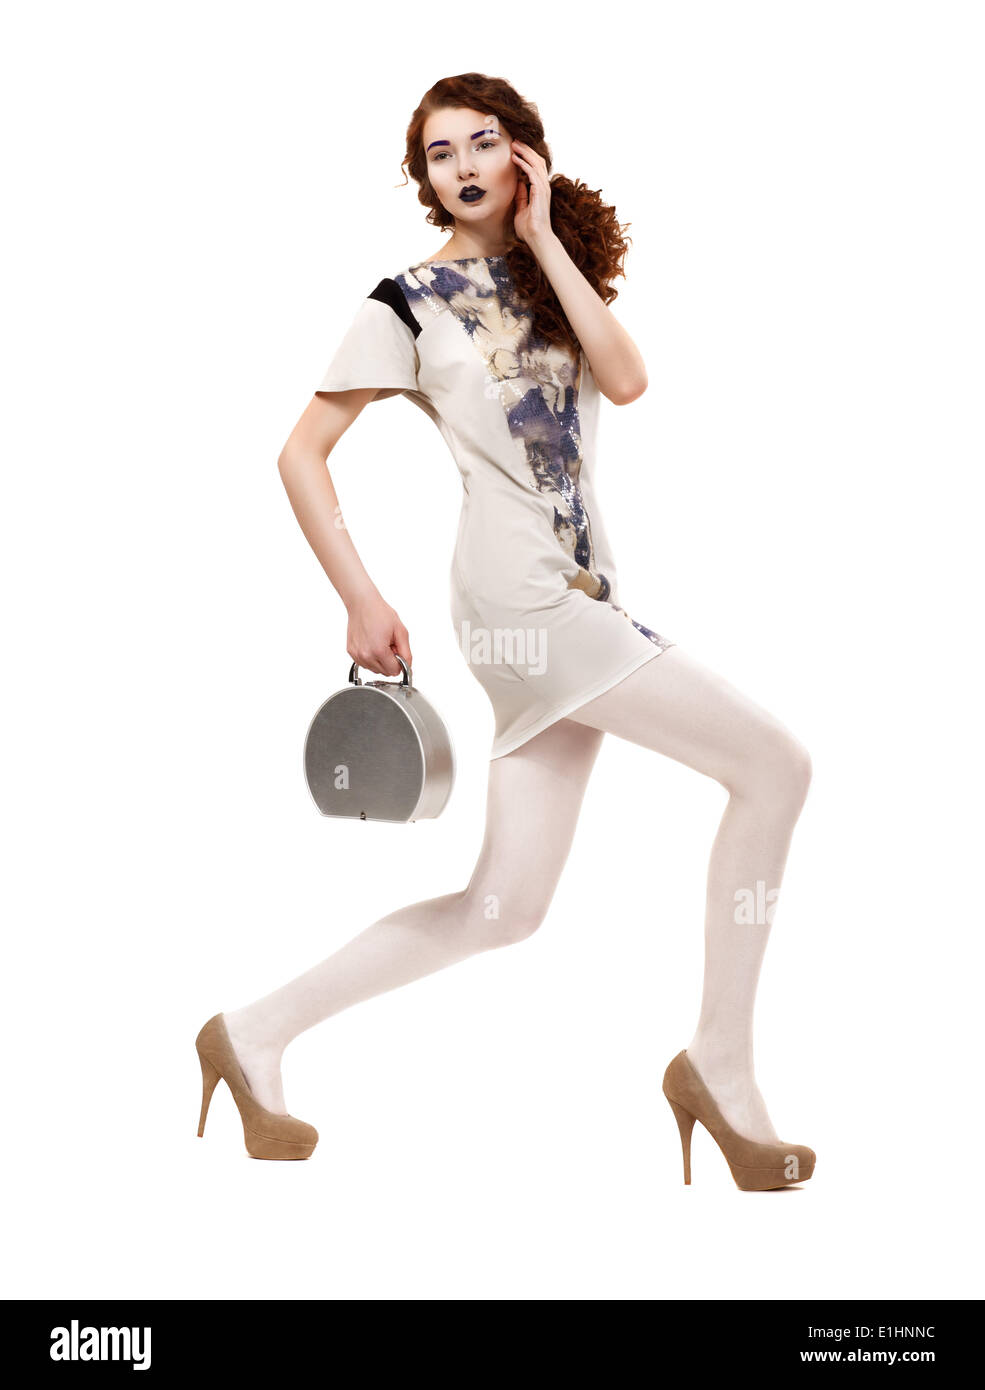 Profile of Urban Glamorous Fashion Model in Trendy Clothing. Lifestyle Stock Photo